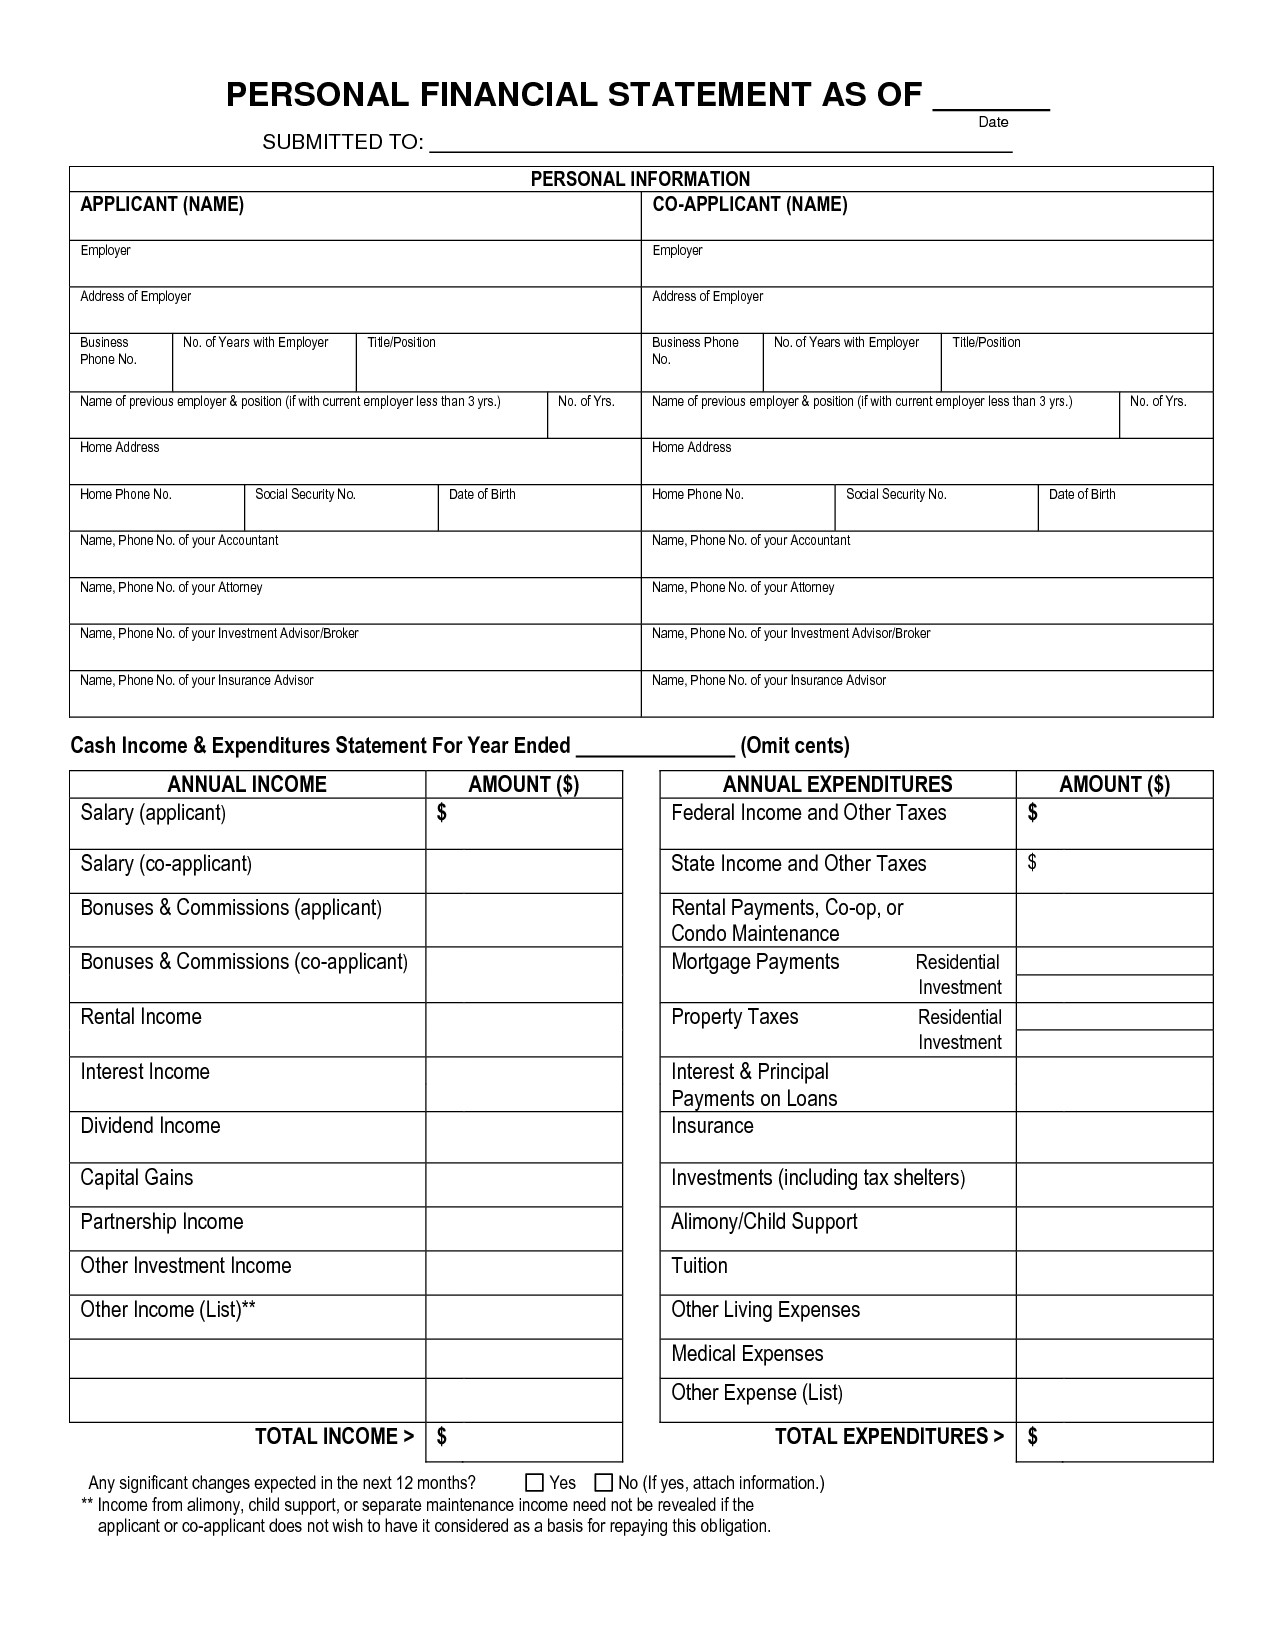 Personal Financial Statement Worksheet Free Printable Personal Financial Statement